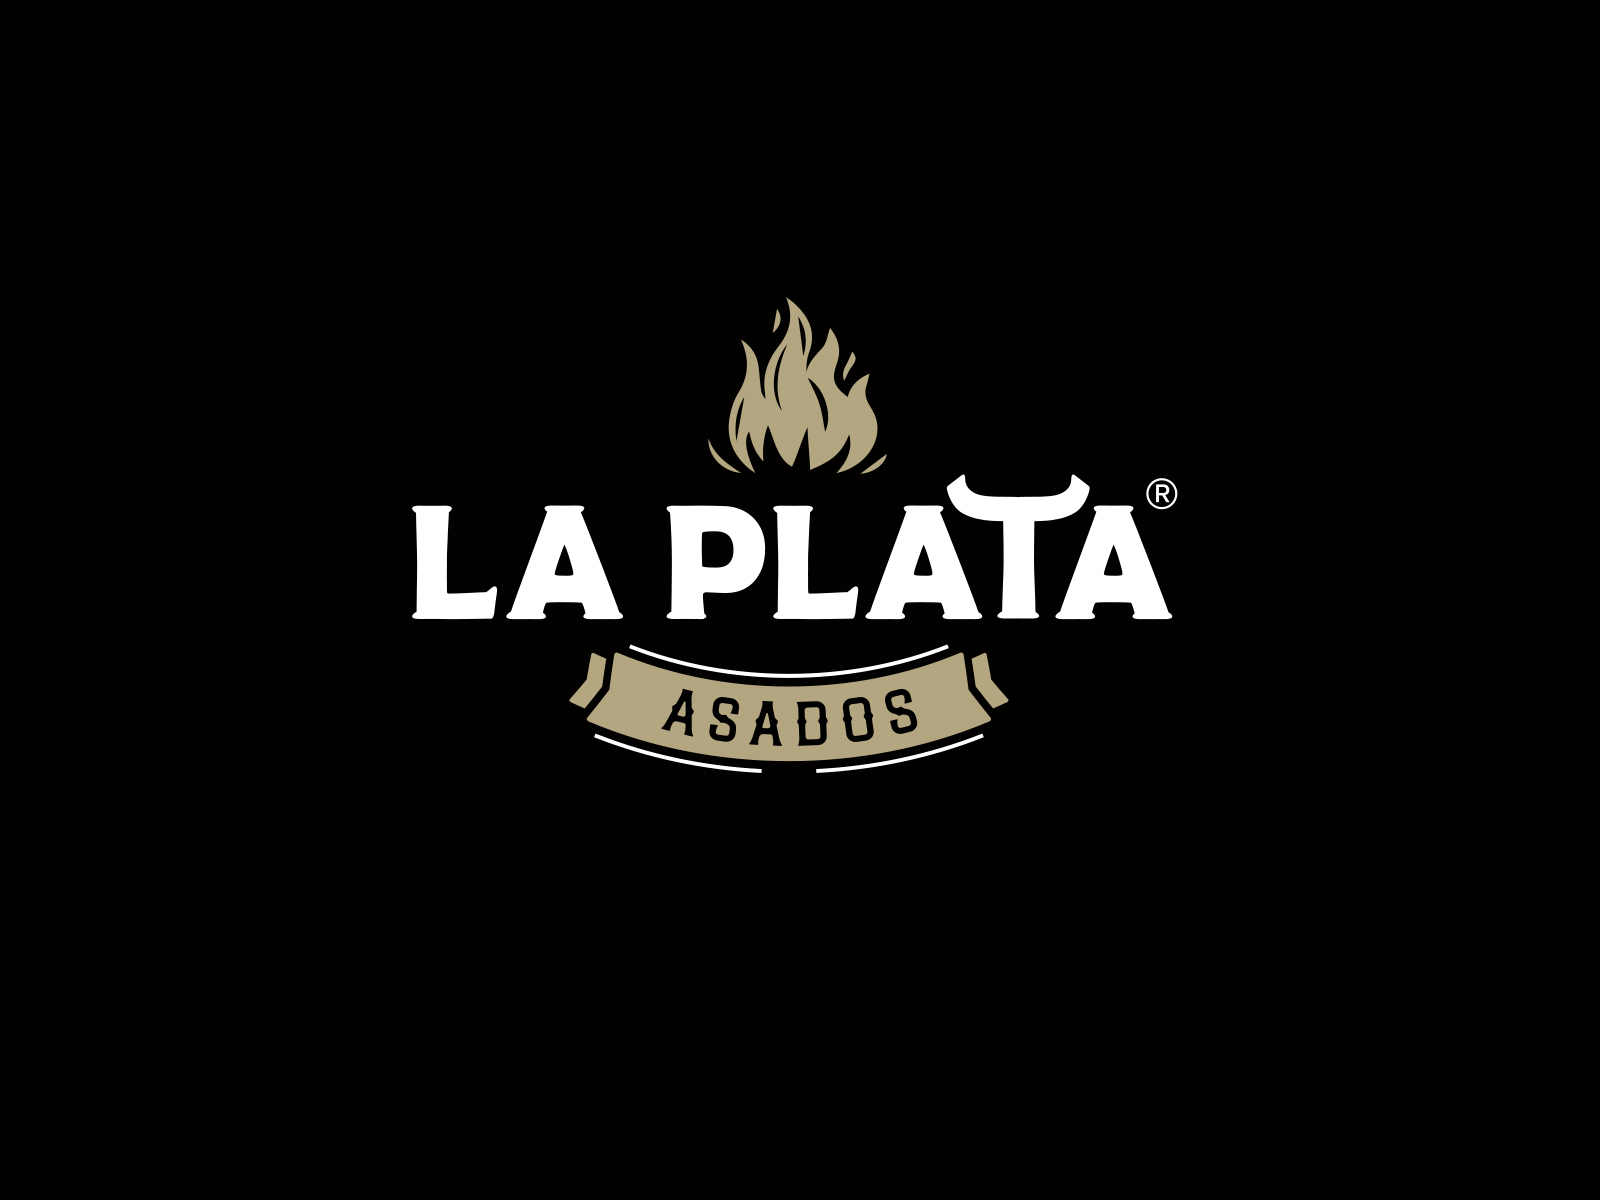 LA PLATA / Branding by Gustavo Venturini on Dribbble